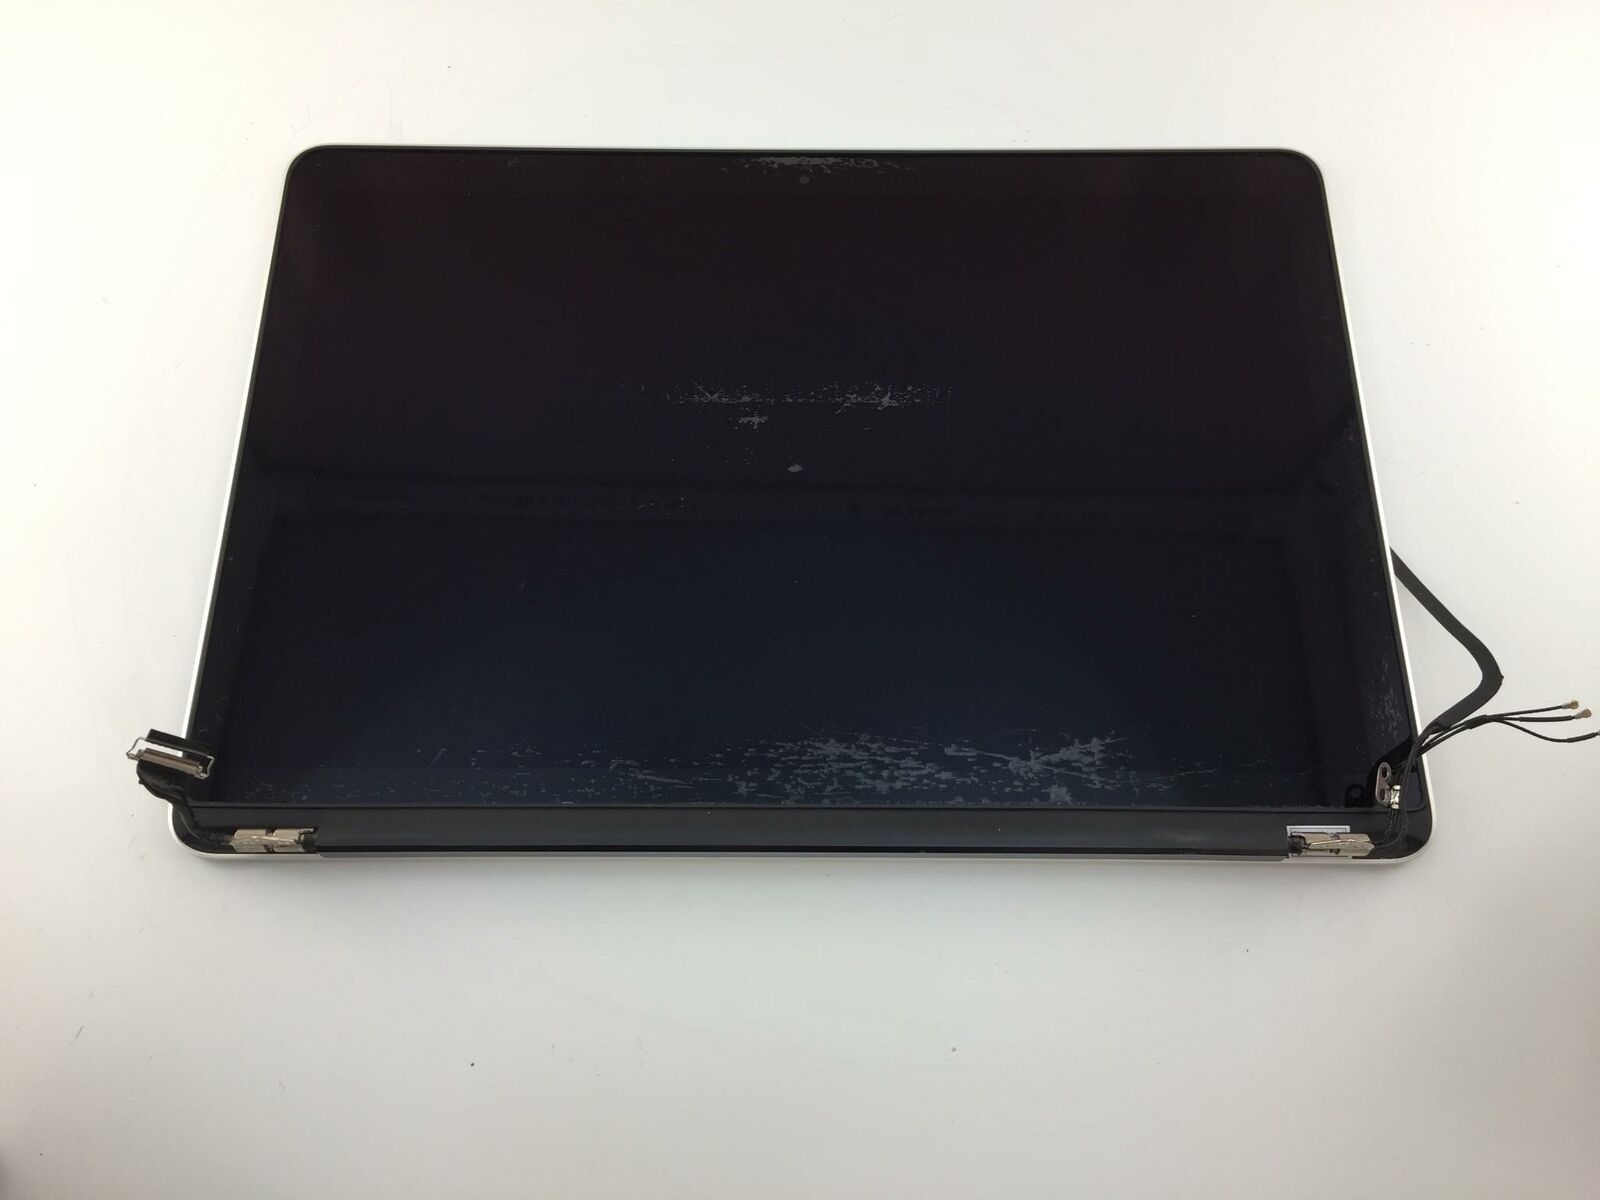 2012c13 inch macbook pro display replacement cost